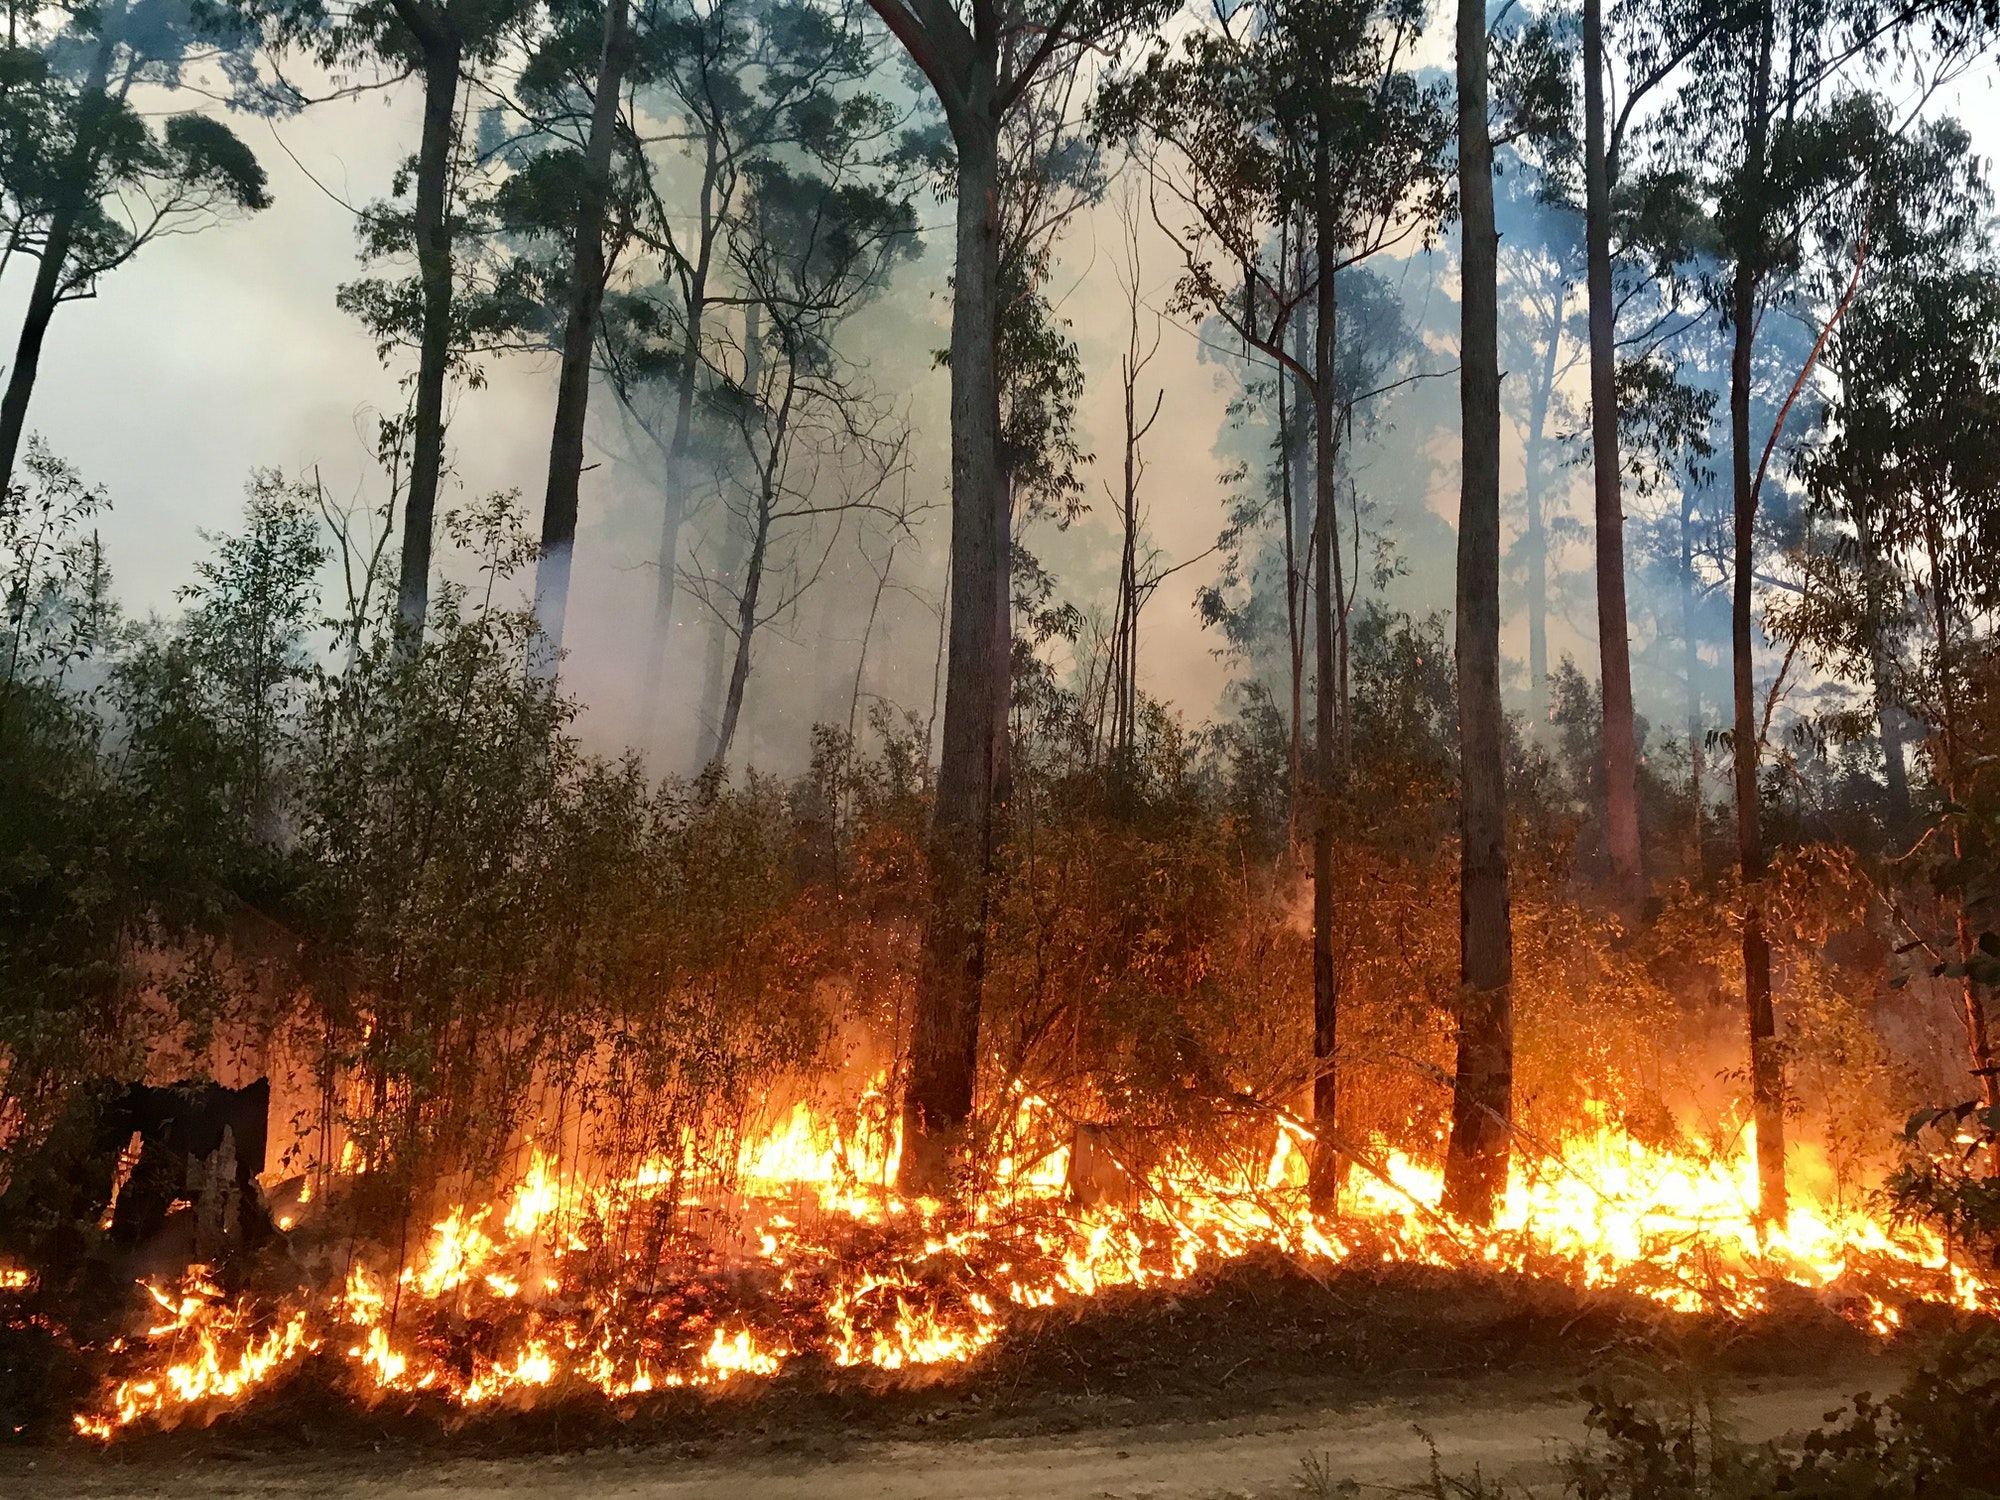 A bushfire burning along the side of a dirt road.